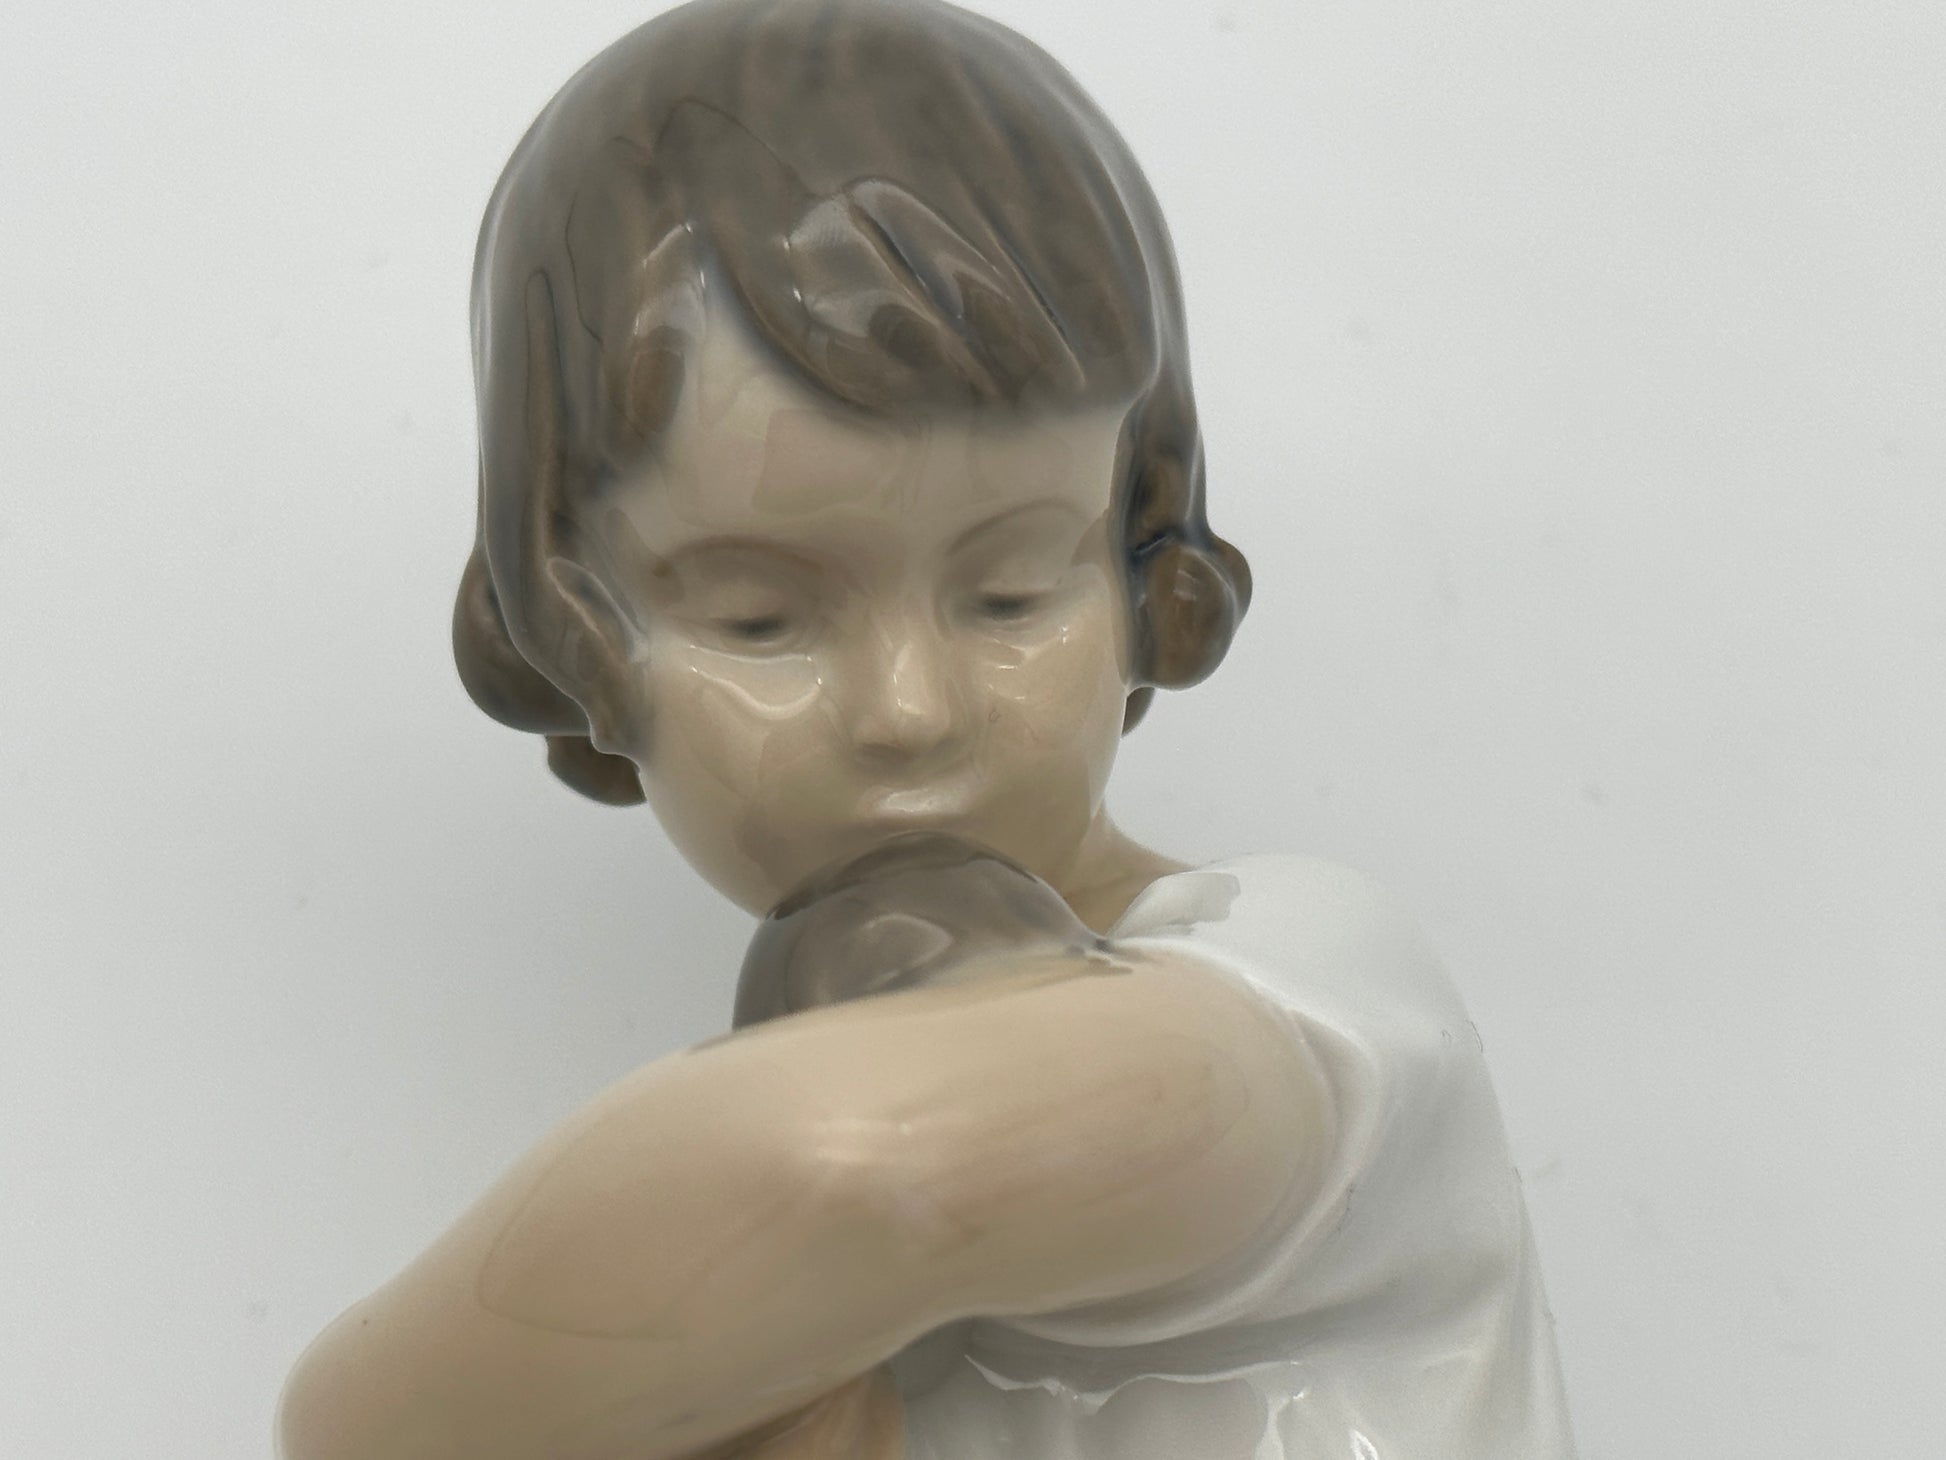 Royal Copenhagen - Girl with doll - No 1938 - 1960 - 13cm - Cute figurine - vintage figurine - old figurine -Scandinapan